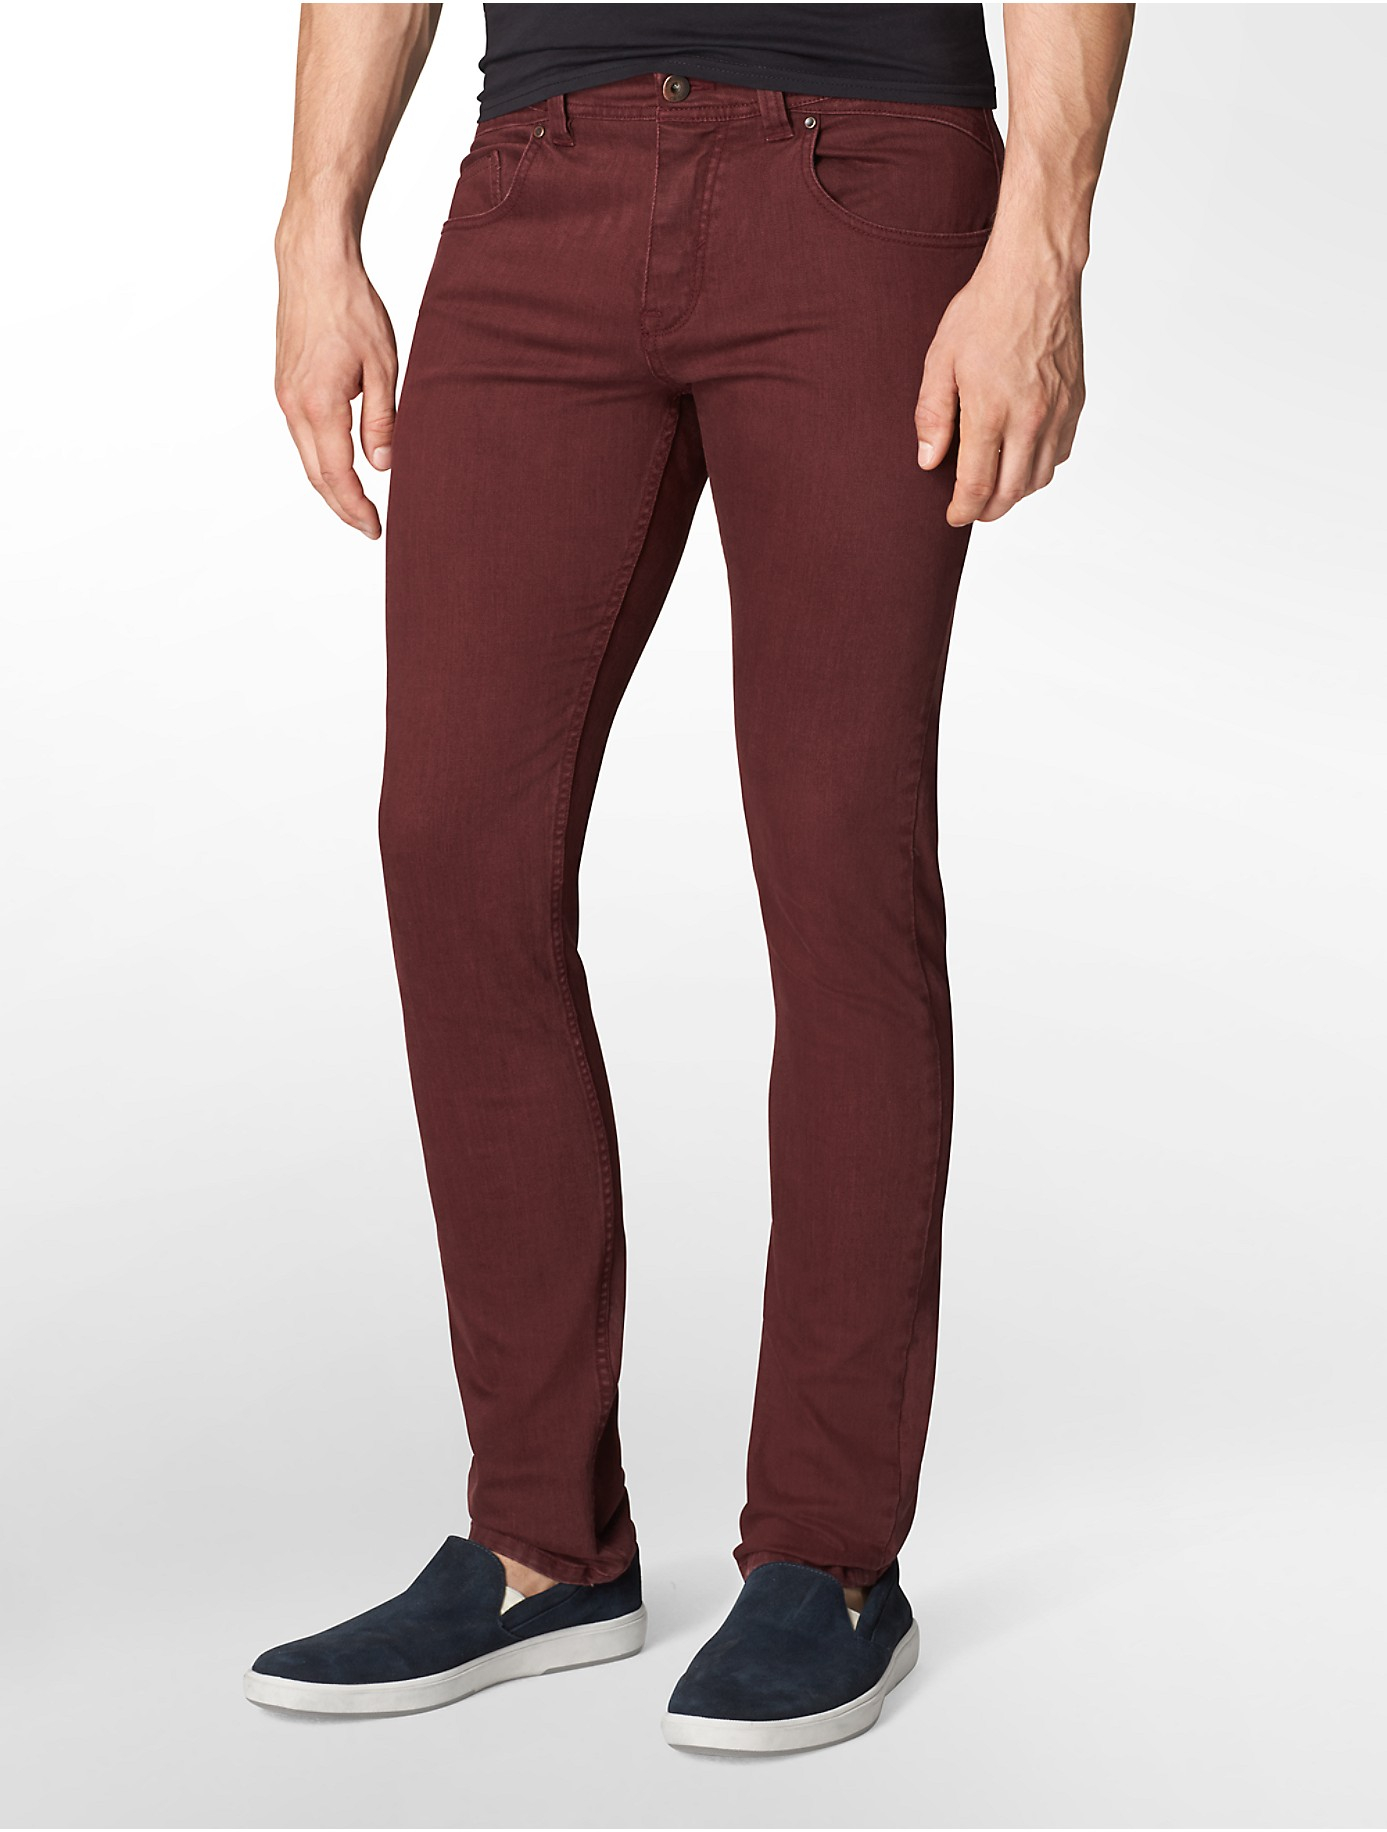 Calvin klein Jeans Slim Leg 5-Pocket Cotton Stretch Twill Pants in ...